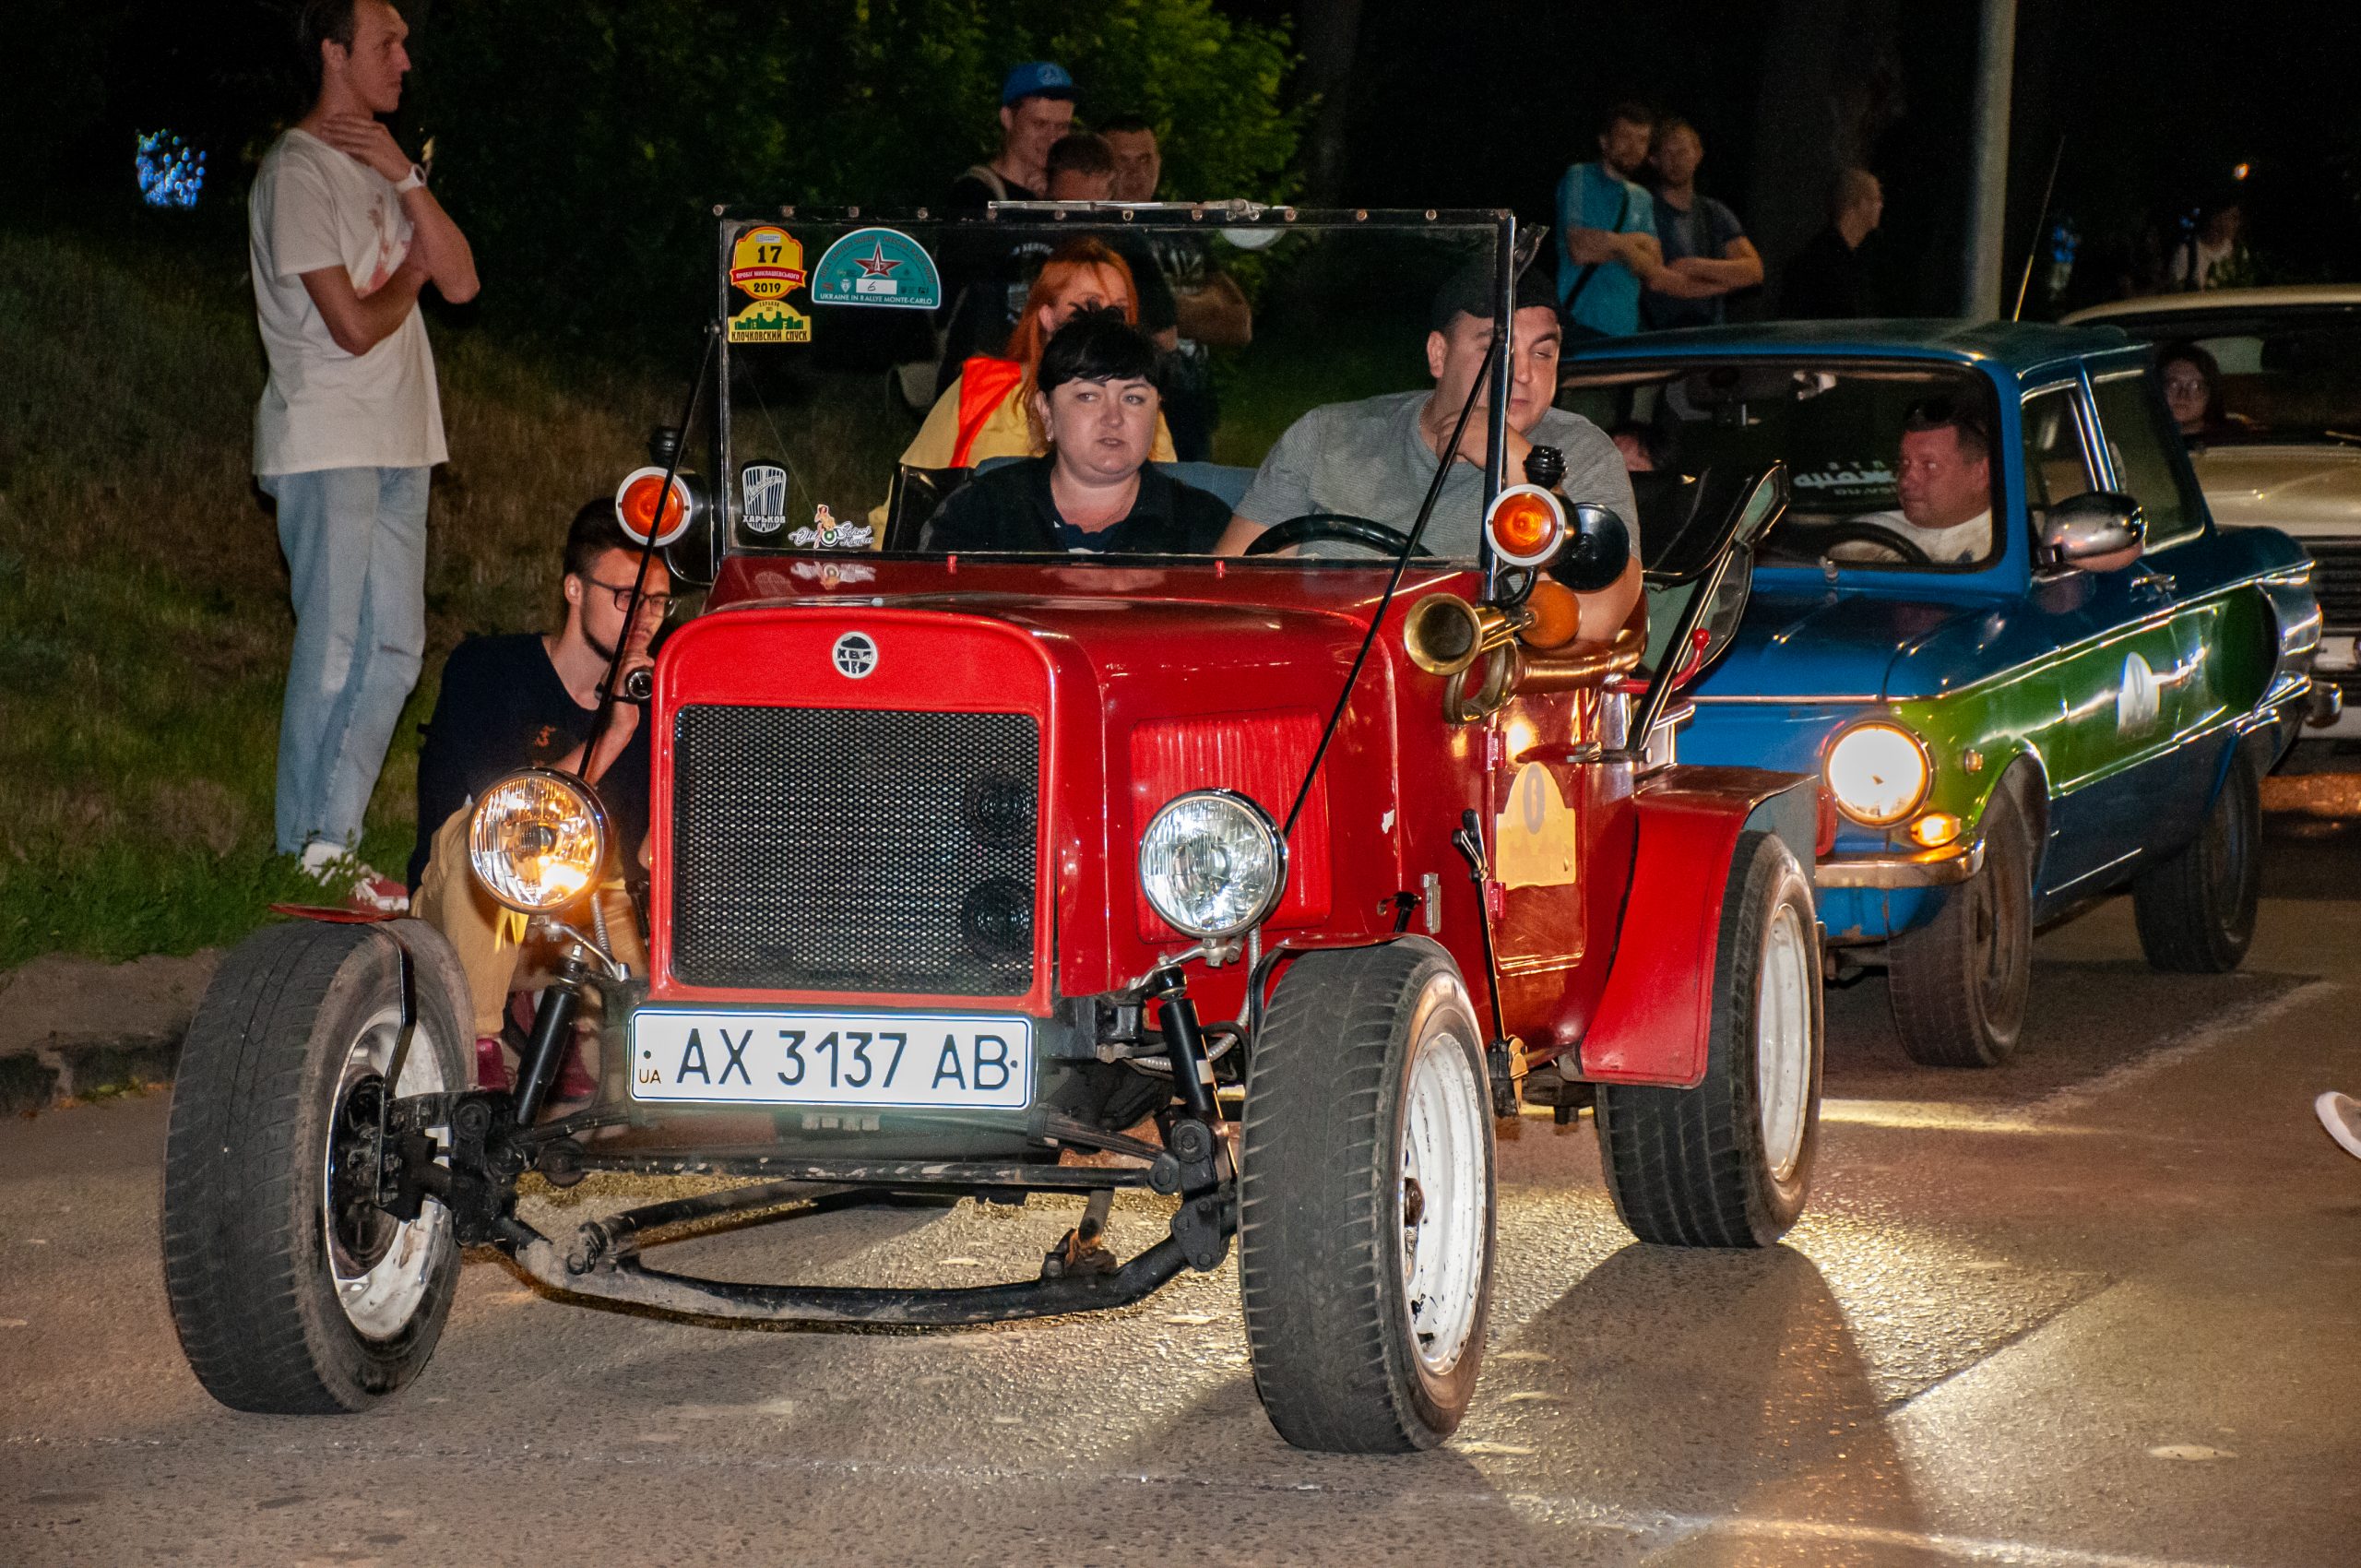 Ретро-автопробег ко Дню независимости: советский «Запорожец» отправится на международное «Ралли Монте-Карло»